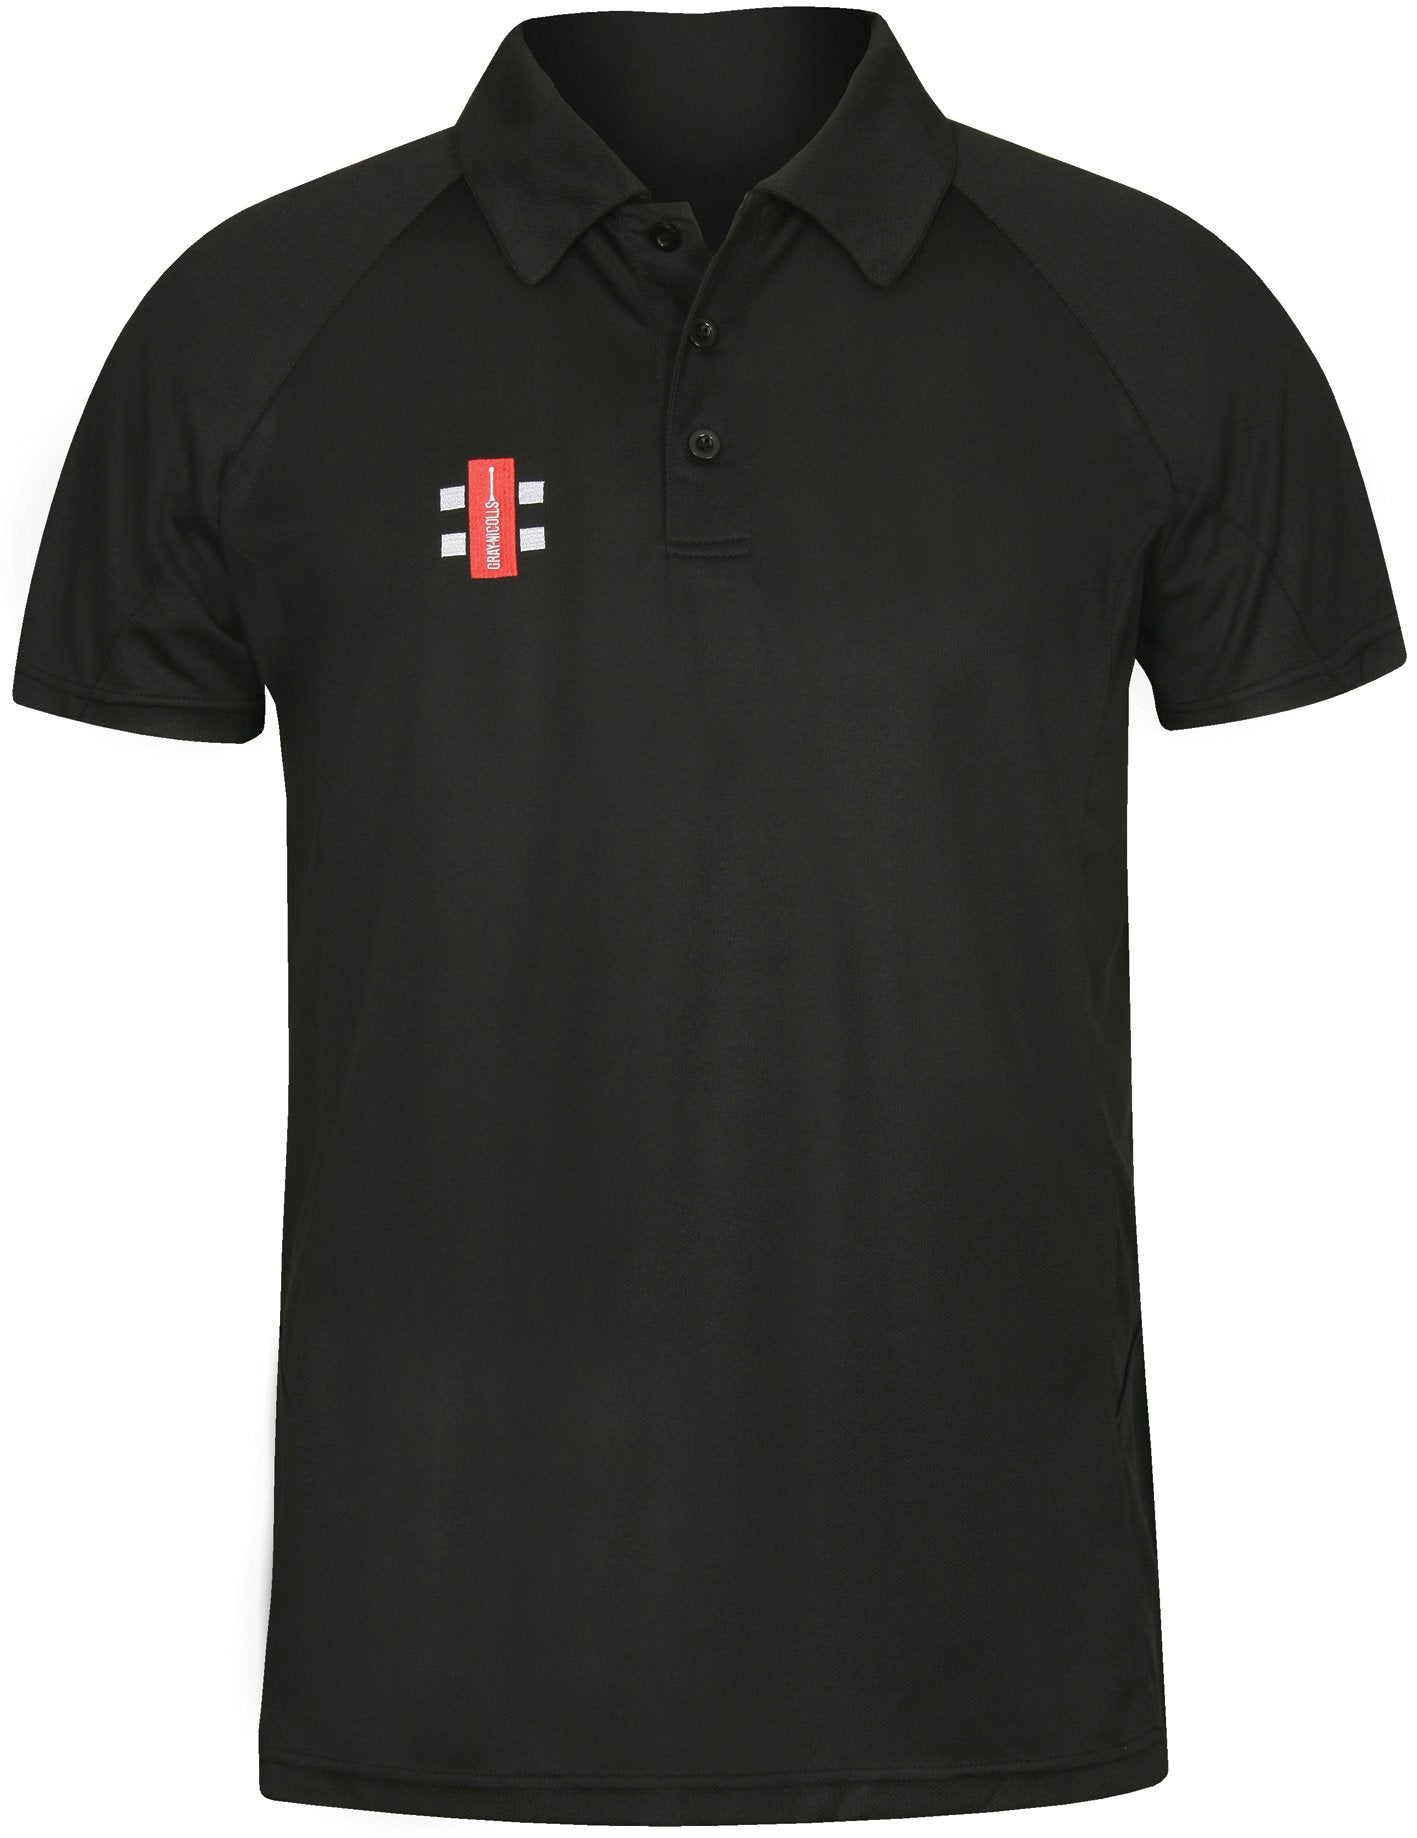 CCFC14LeisureShirts Matrix Polo Shirt Black